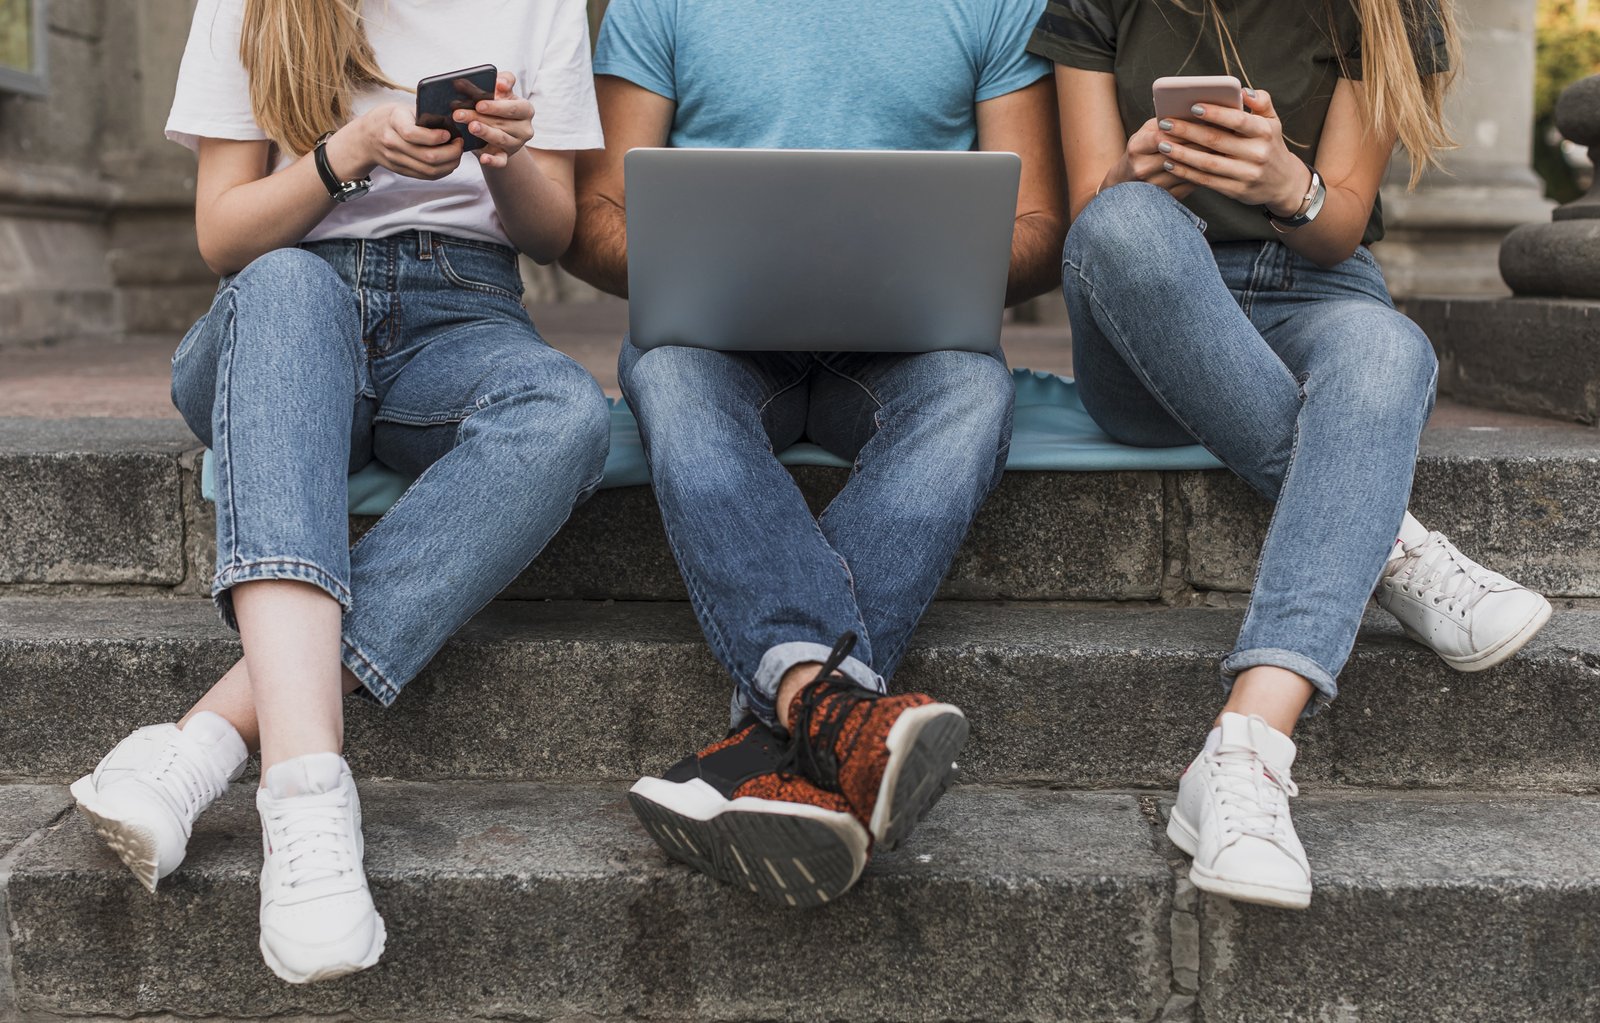 internet use among teens